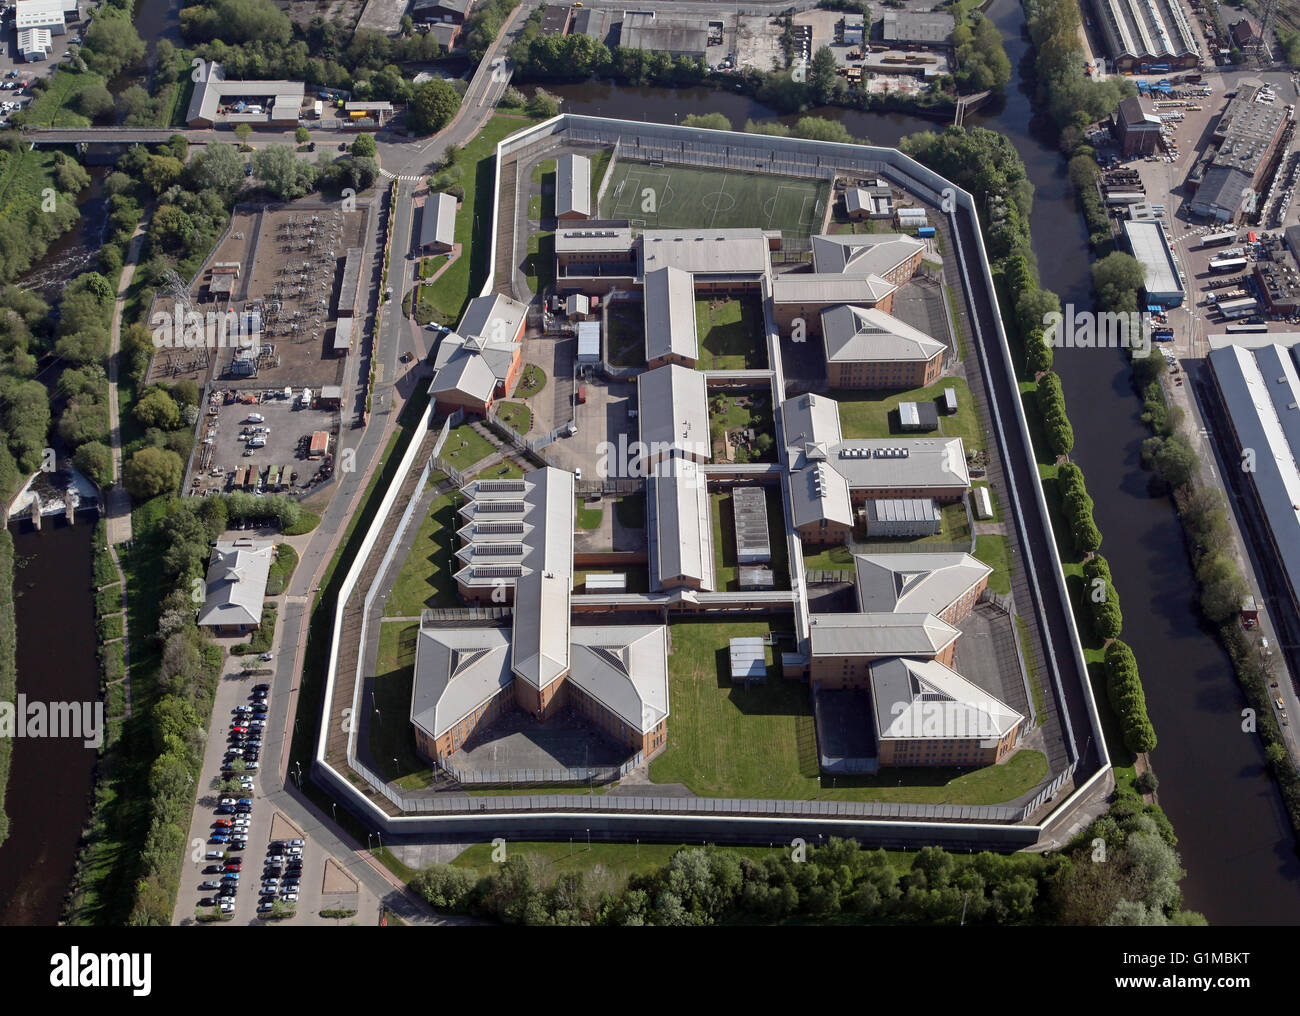 aerial view of Doncatraz - HMP & YOI Doncaster Prison, Yorkshire, UK Stock Photo